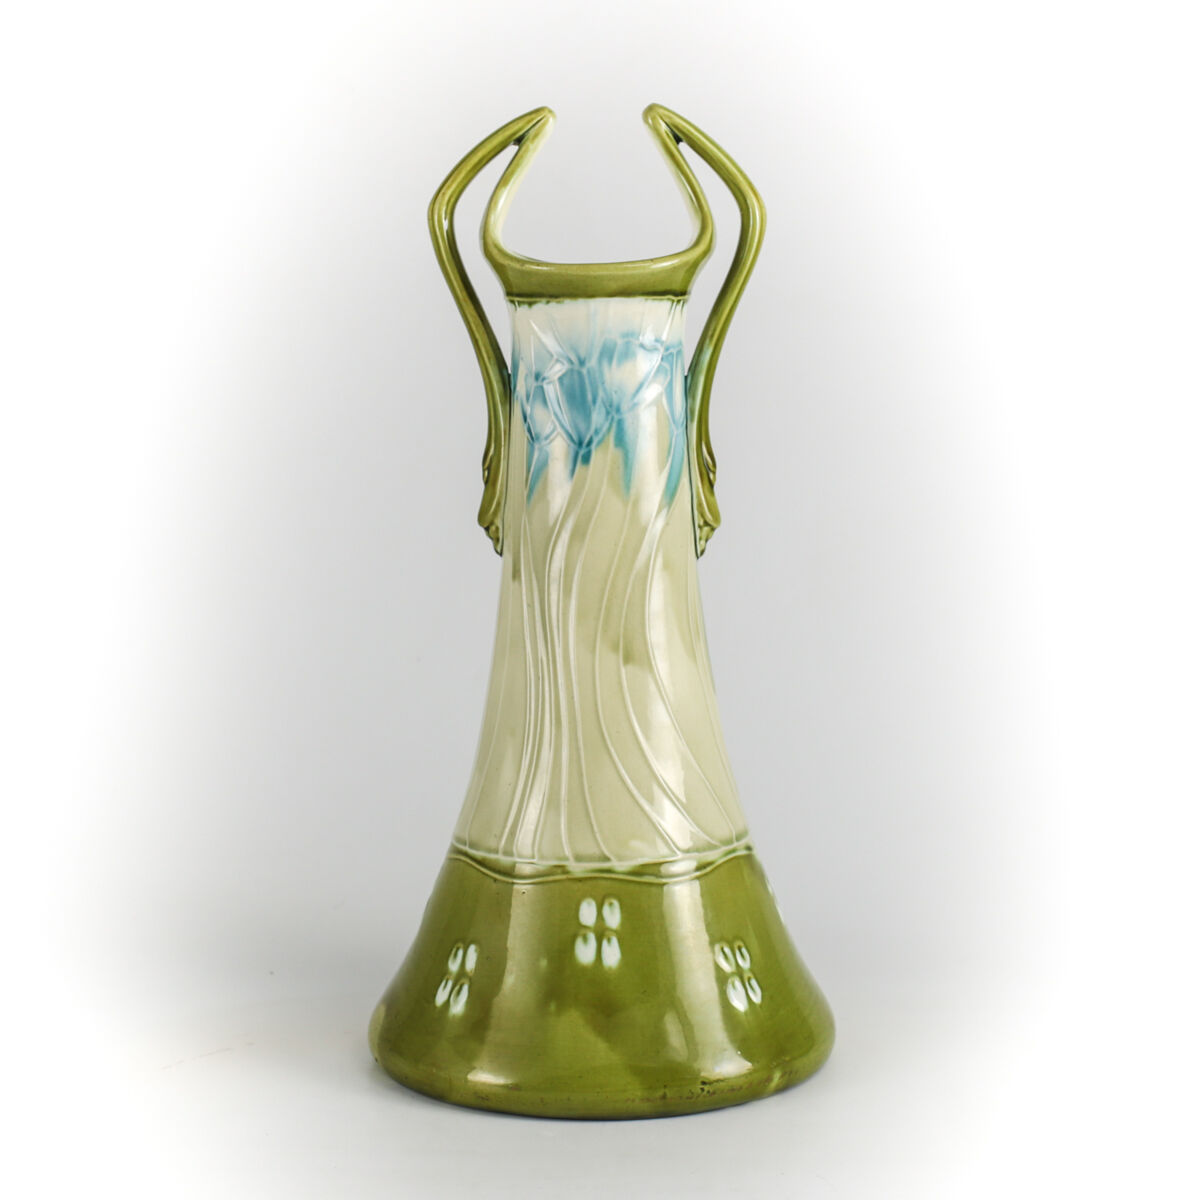 Minton Majolica Pottery Green Twin Handled Vase, Secessionist Movement 